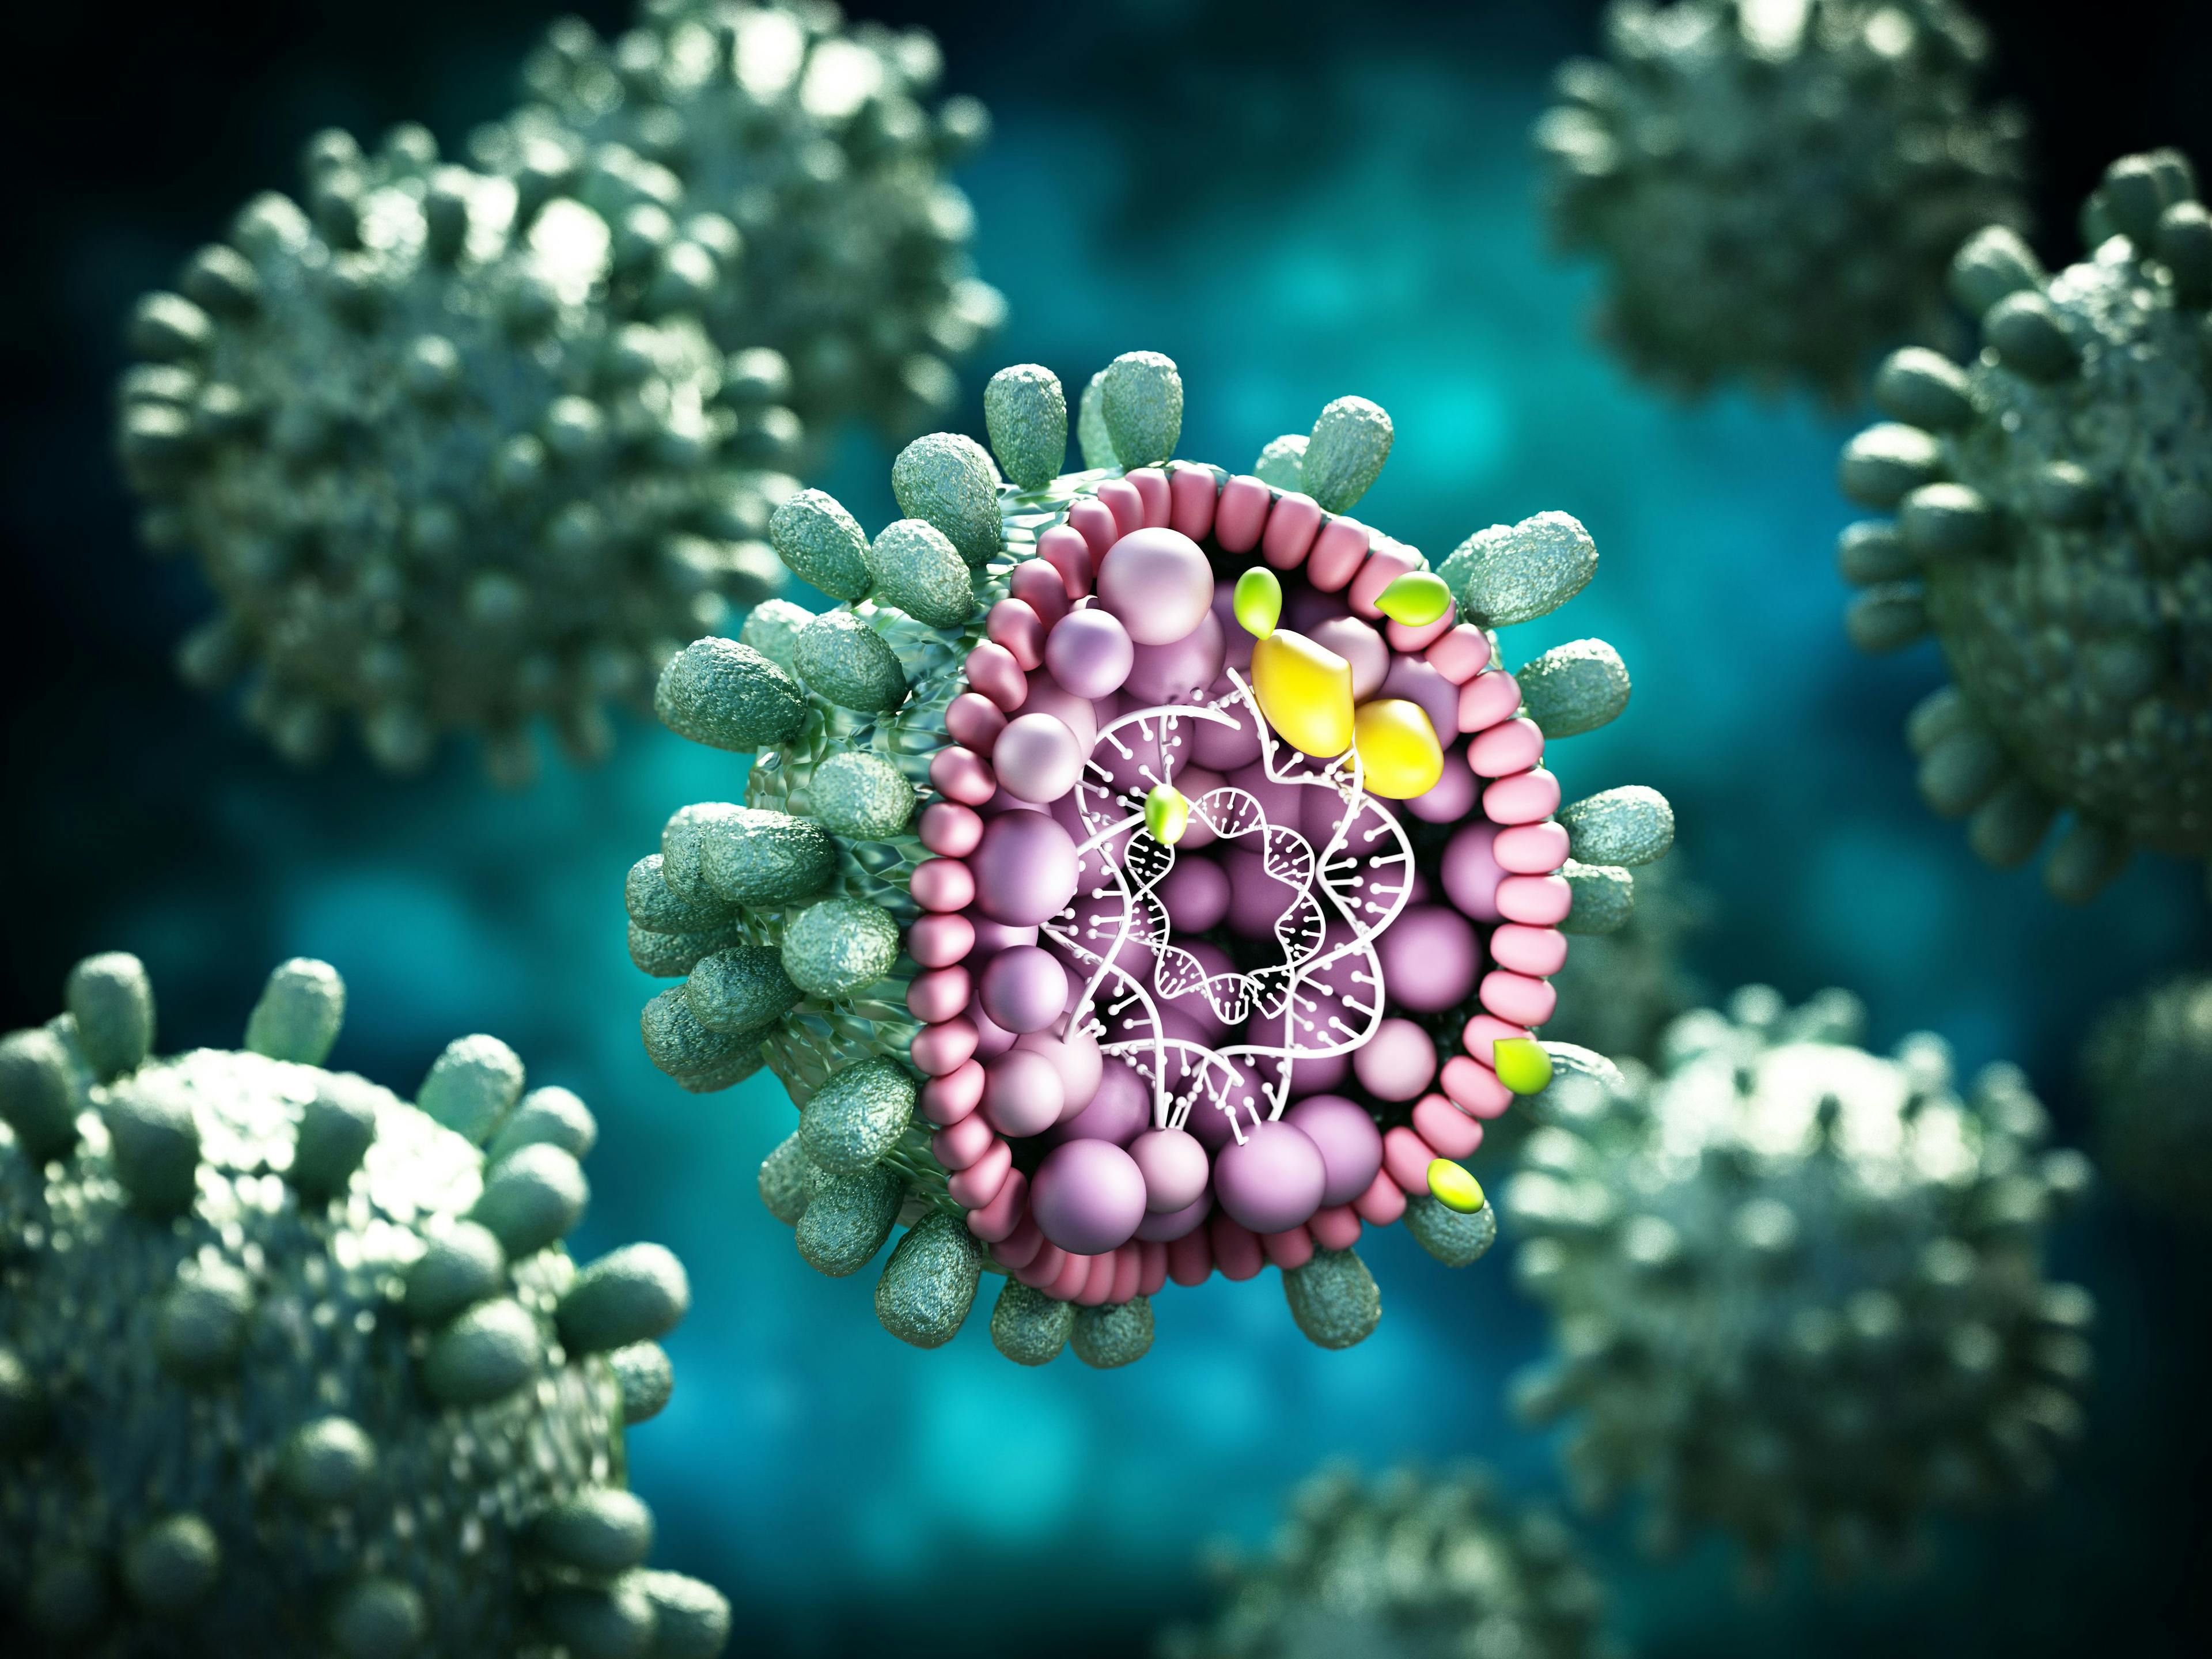 Image credit: Destina | stock.adobe.com. Structural detail of Hepatitis B virus on blue-green background.